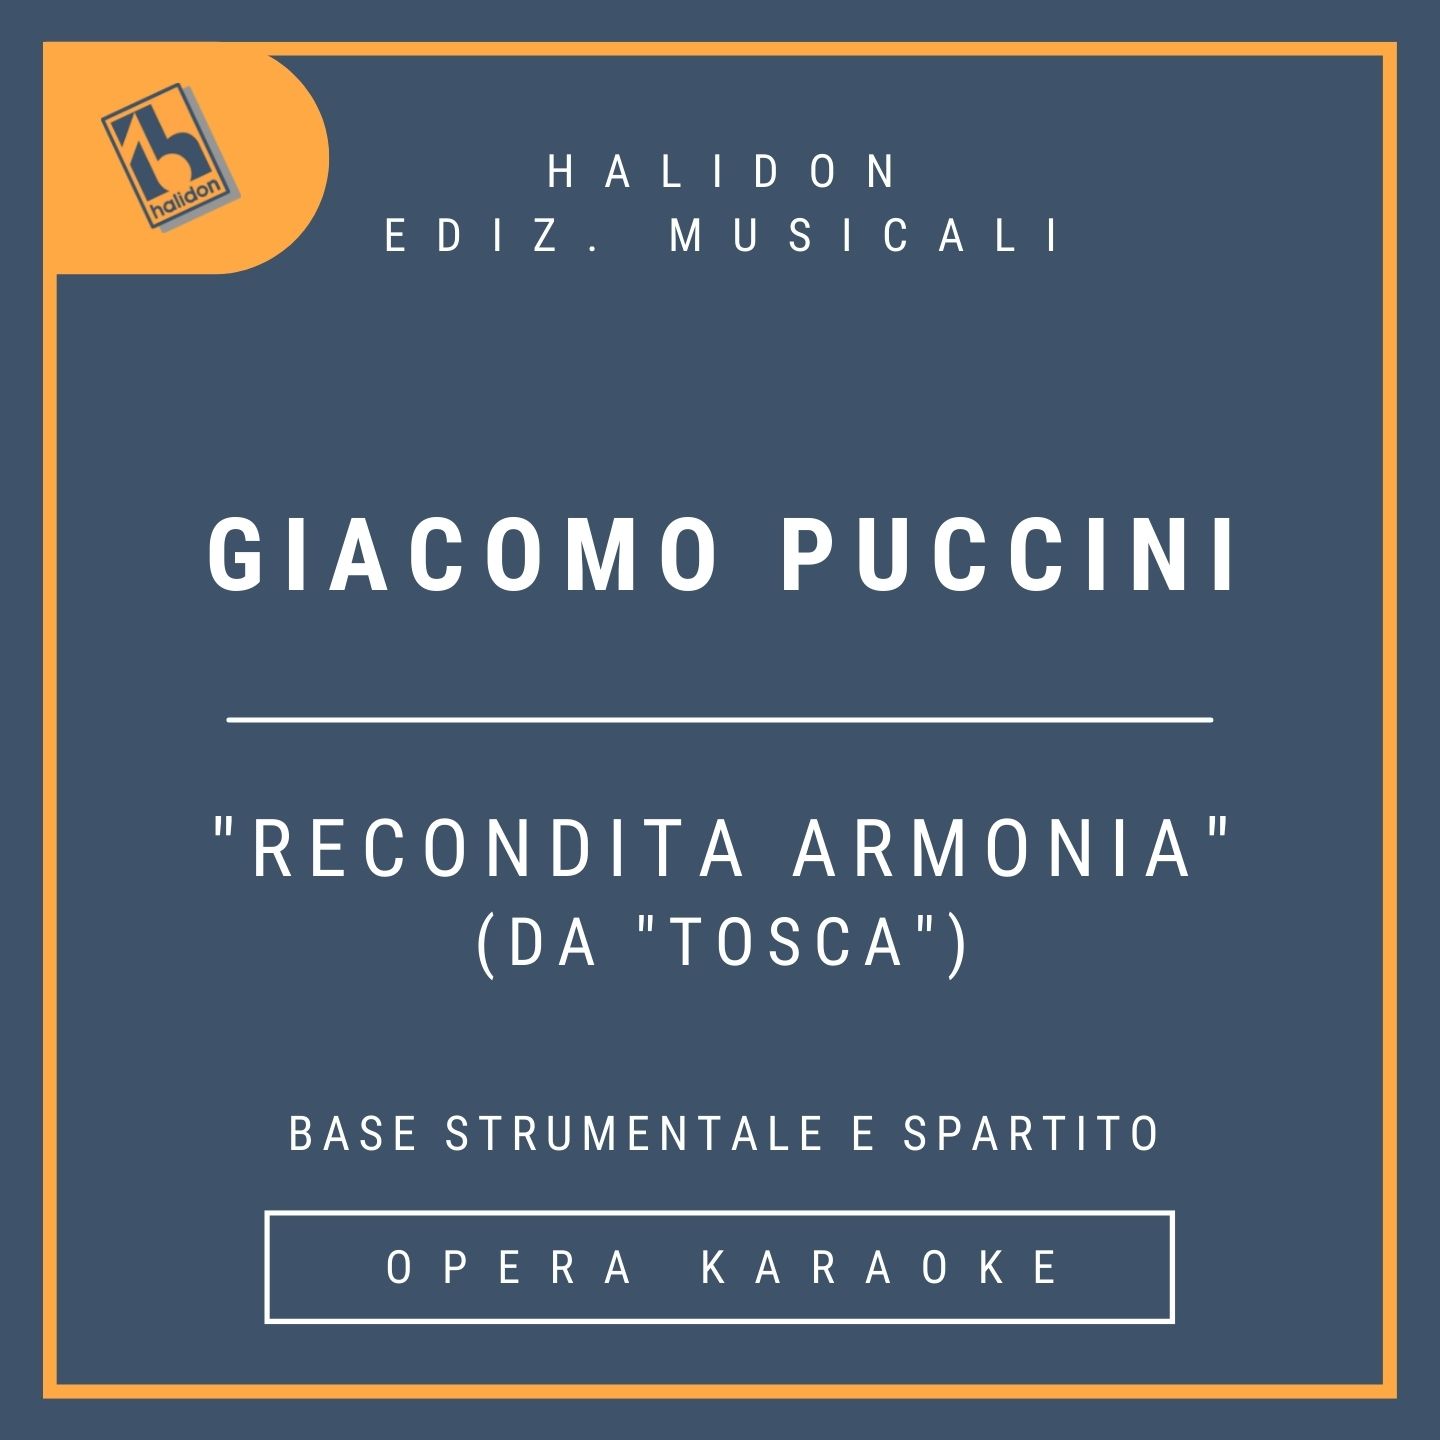 Giacomo Puccini - Recondita armonia (from 'Tosca') - Cavaradossi Aria (tenor) - Instrumental track + sheet